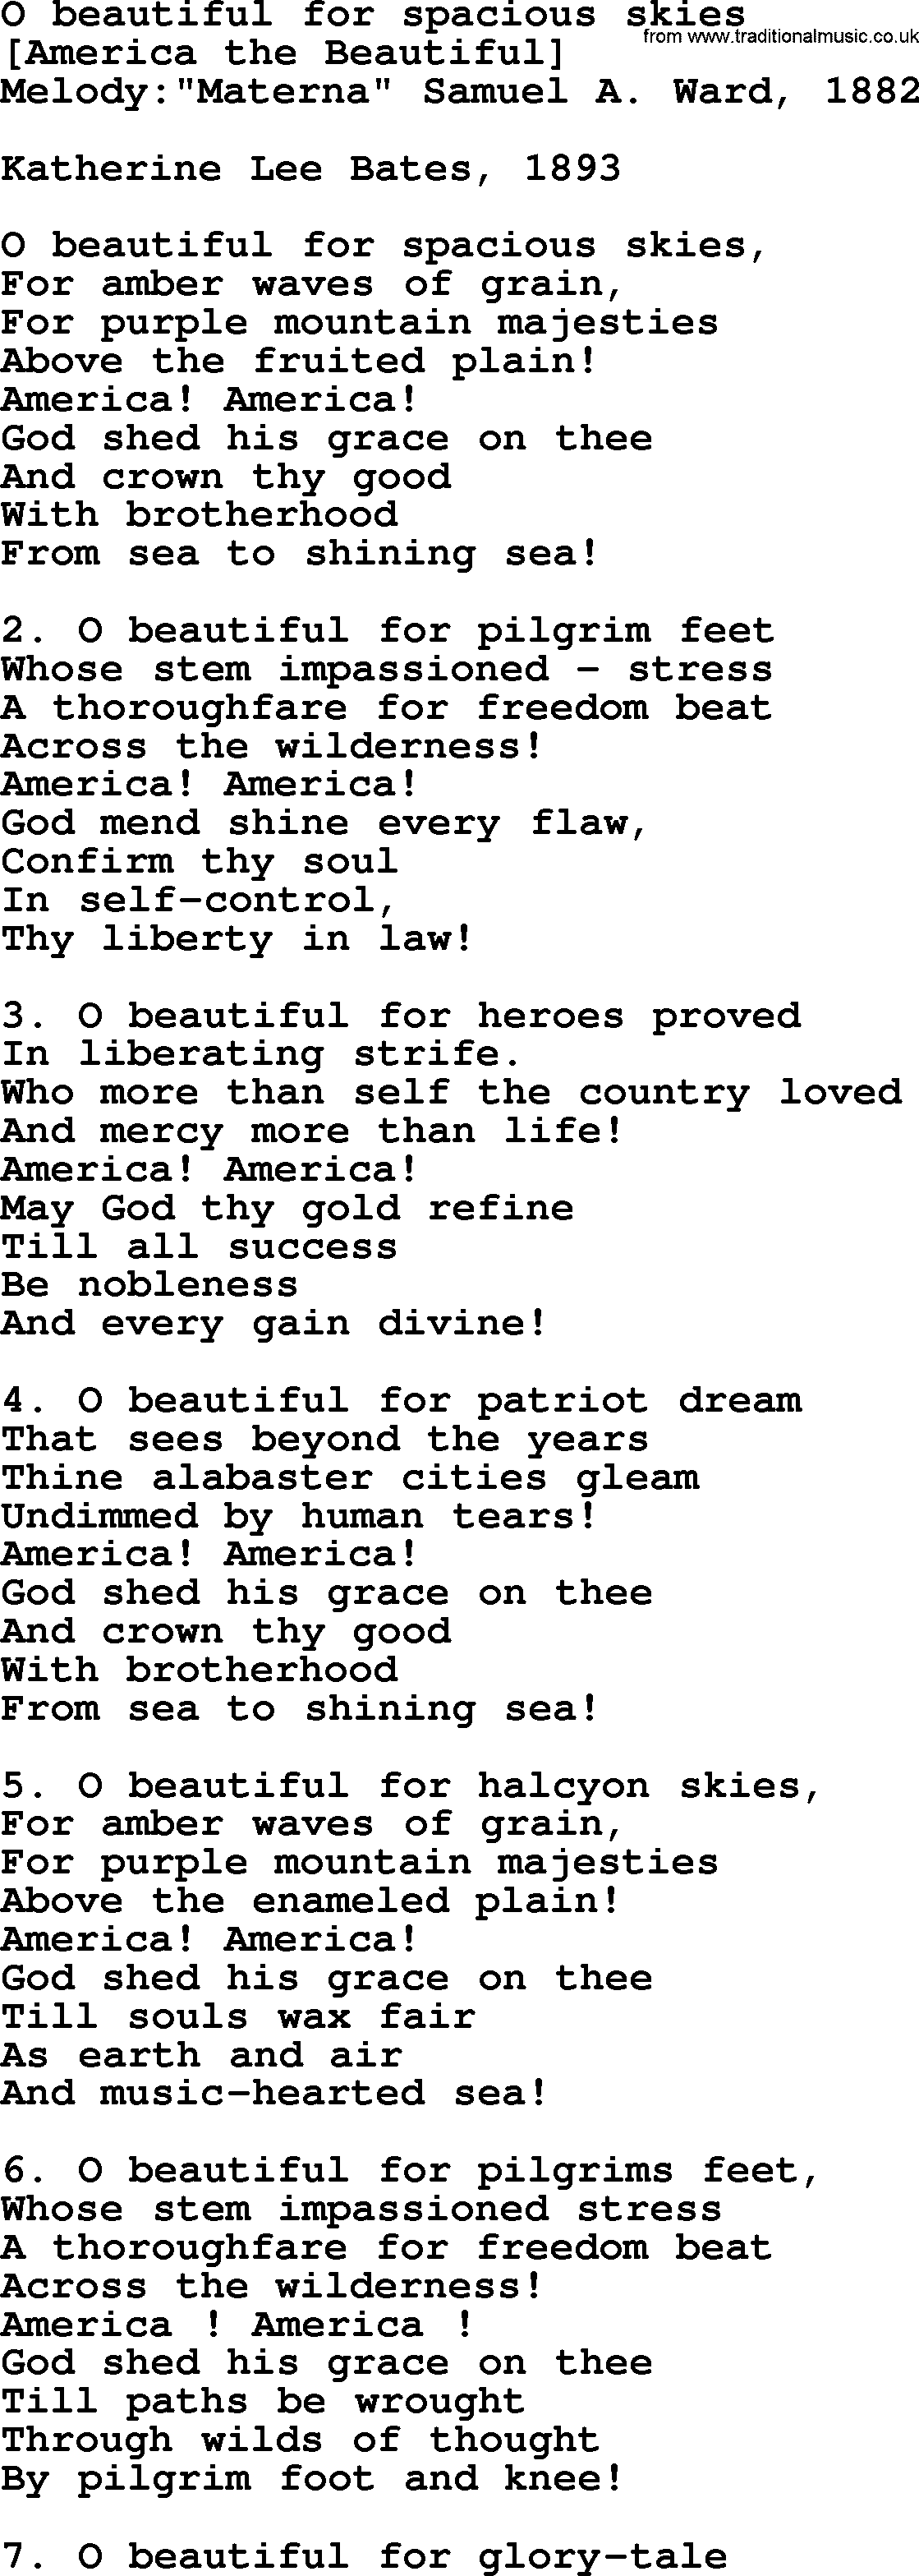 Old American Song: O Beautiful For Spacious Skies, lyrics